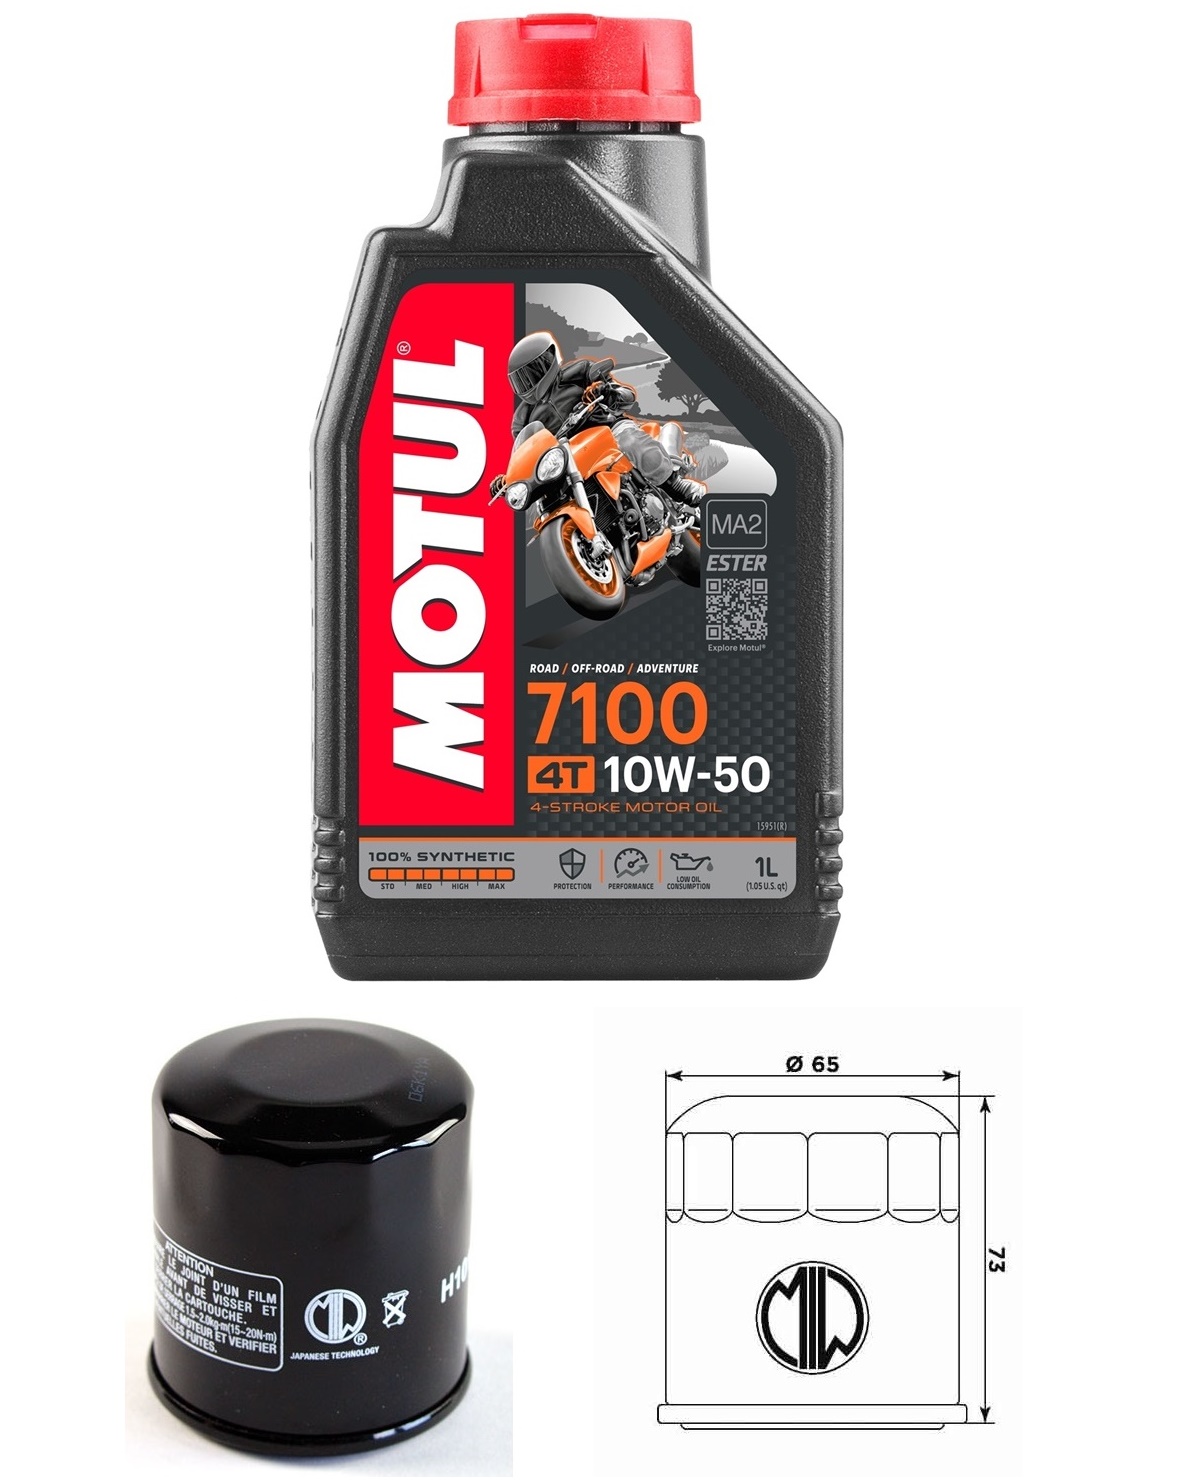 kit tagliando 1 lt litro olio motul 7100 10w50 100% sintetico + 268303 filtro olio meiwa h1013 access-bimota-cpi-honda-kawasaki-yamaha